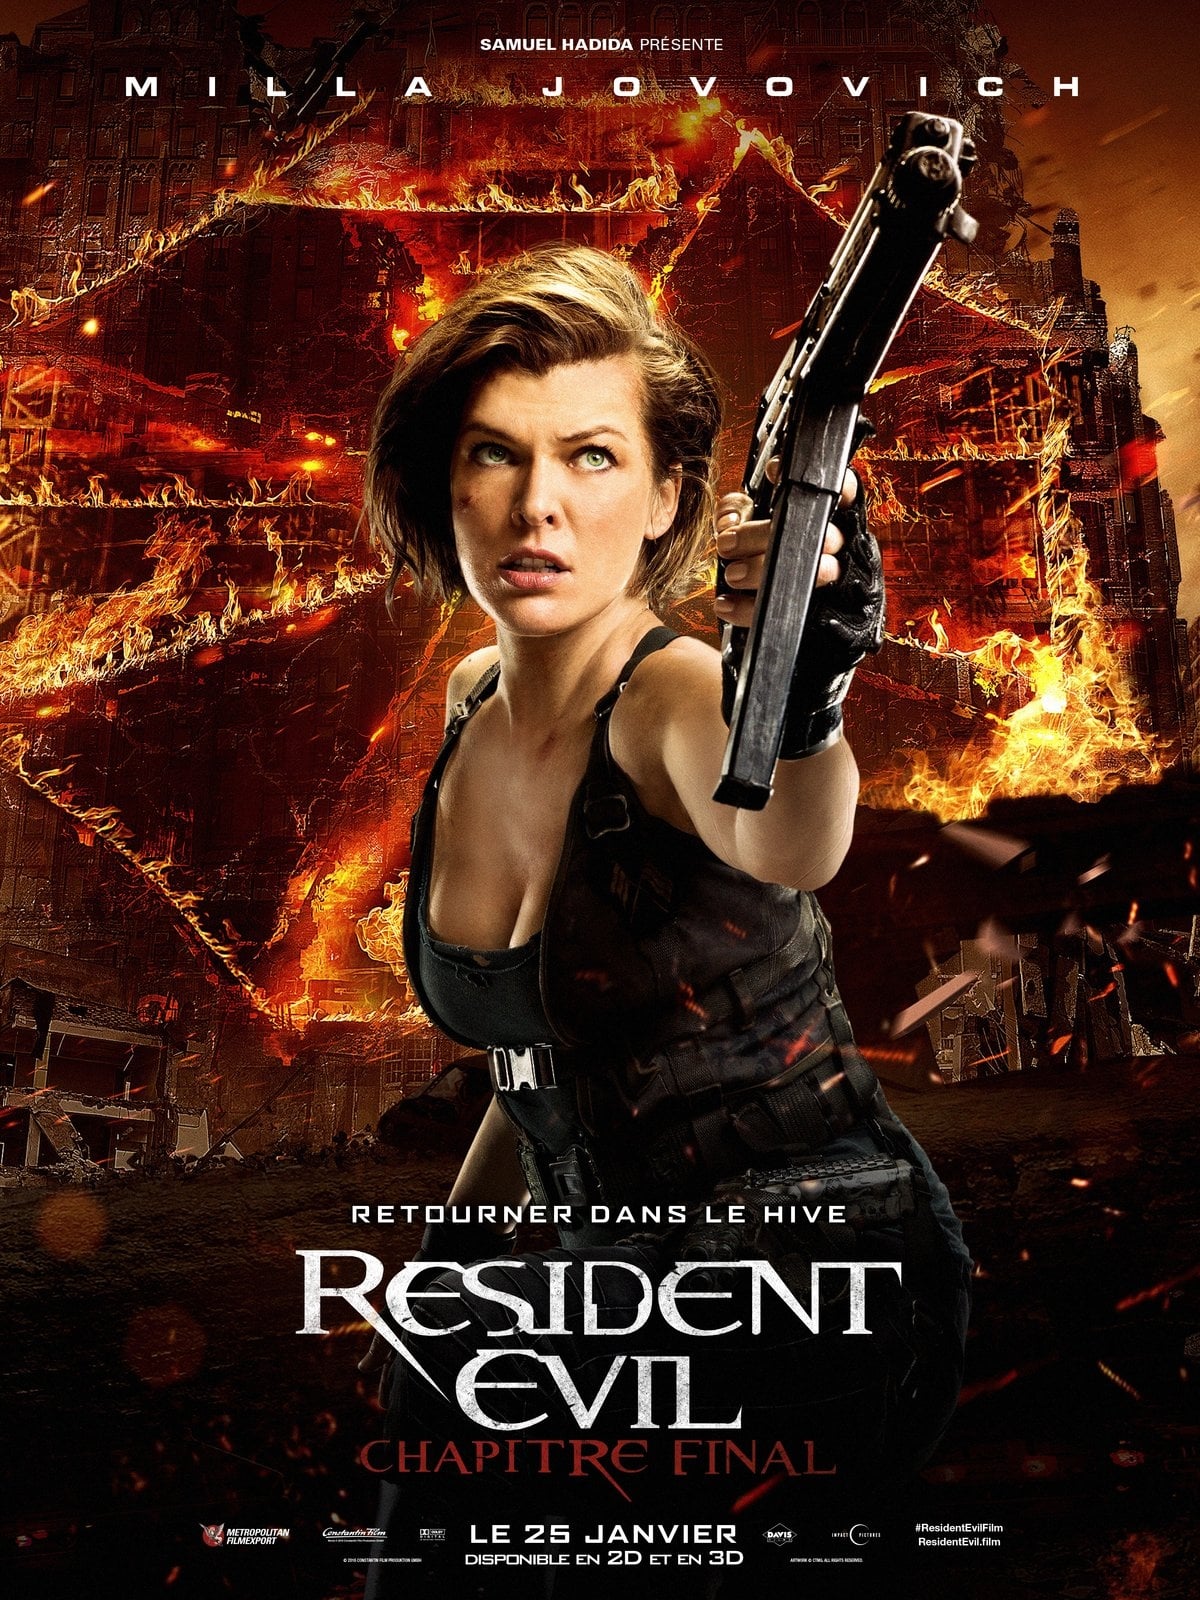 Resident Evil : Chapitre Final streaming sur Film Streaming - Film 2016 - Streaming hd vf